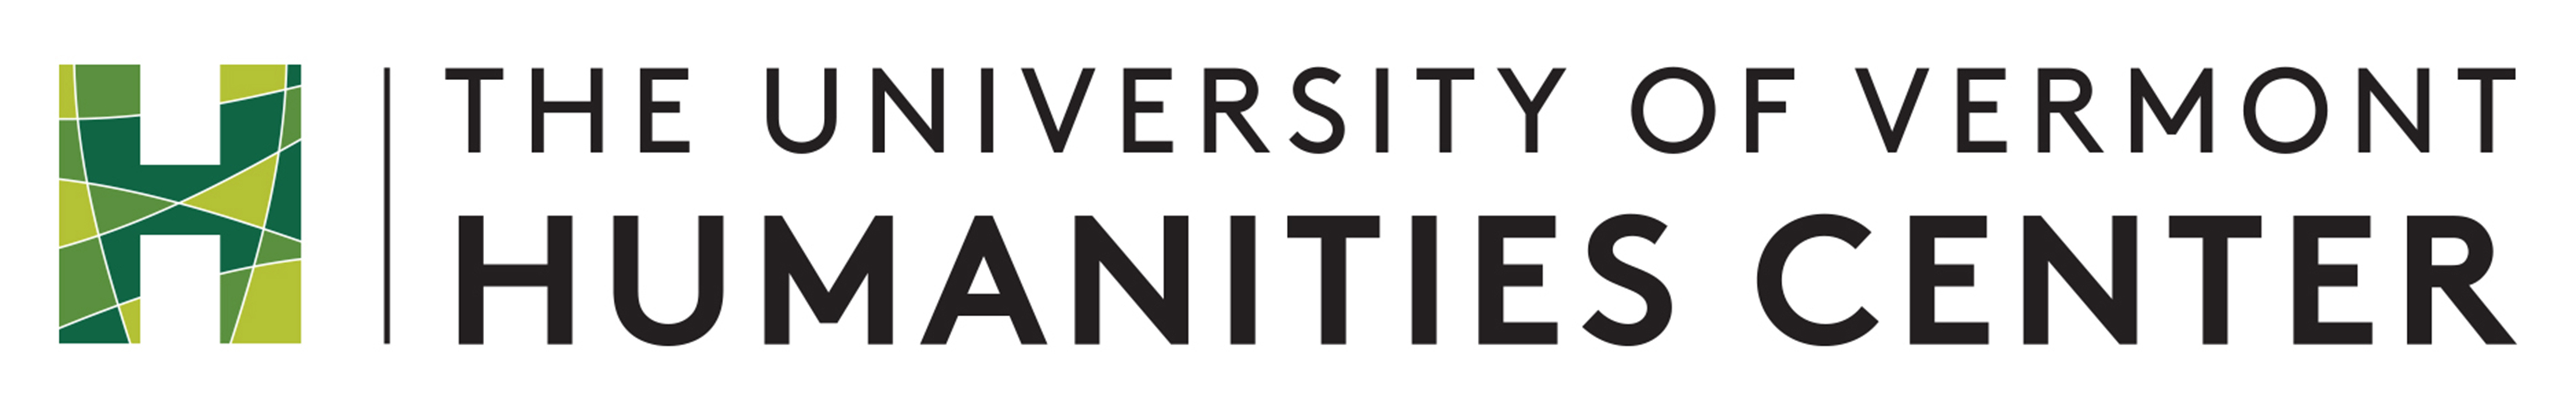 The University of Vermont Humanities Center